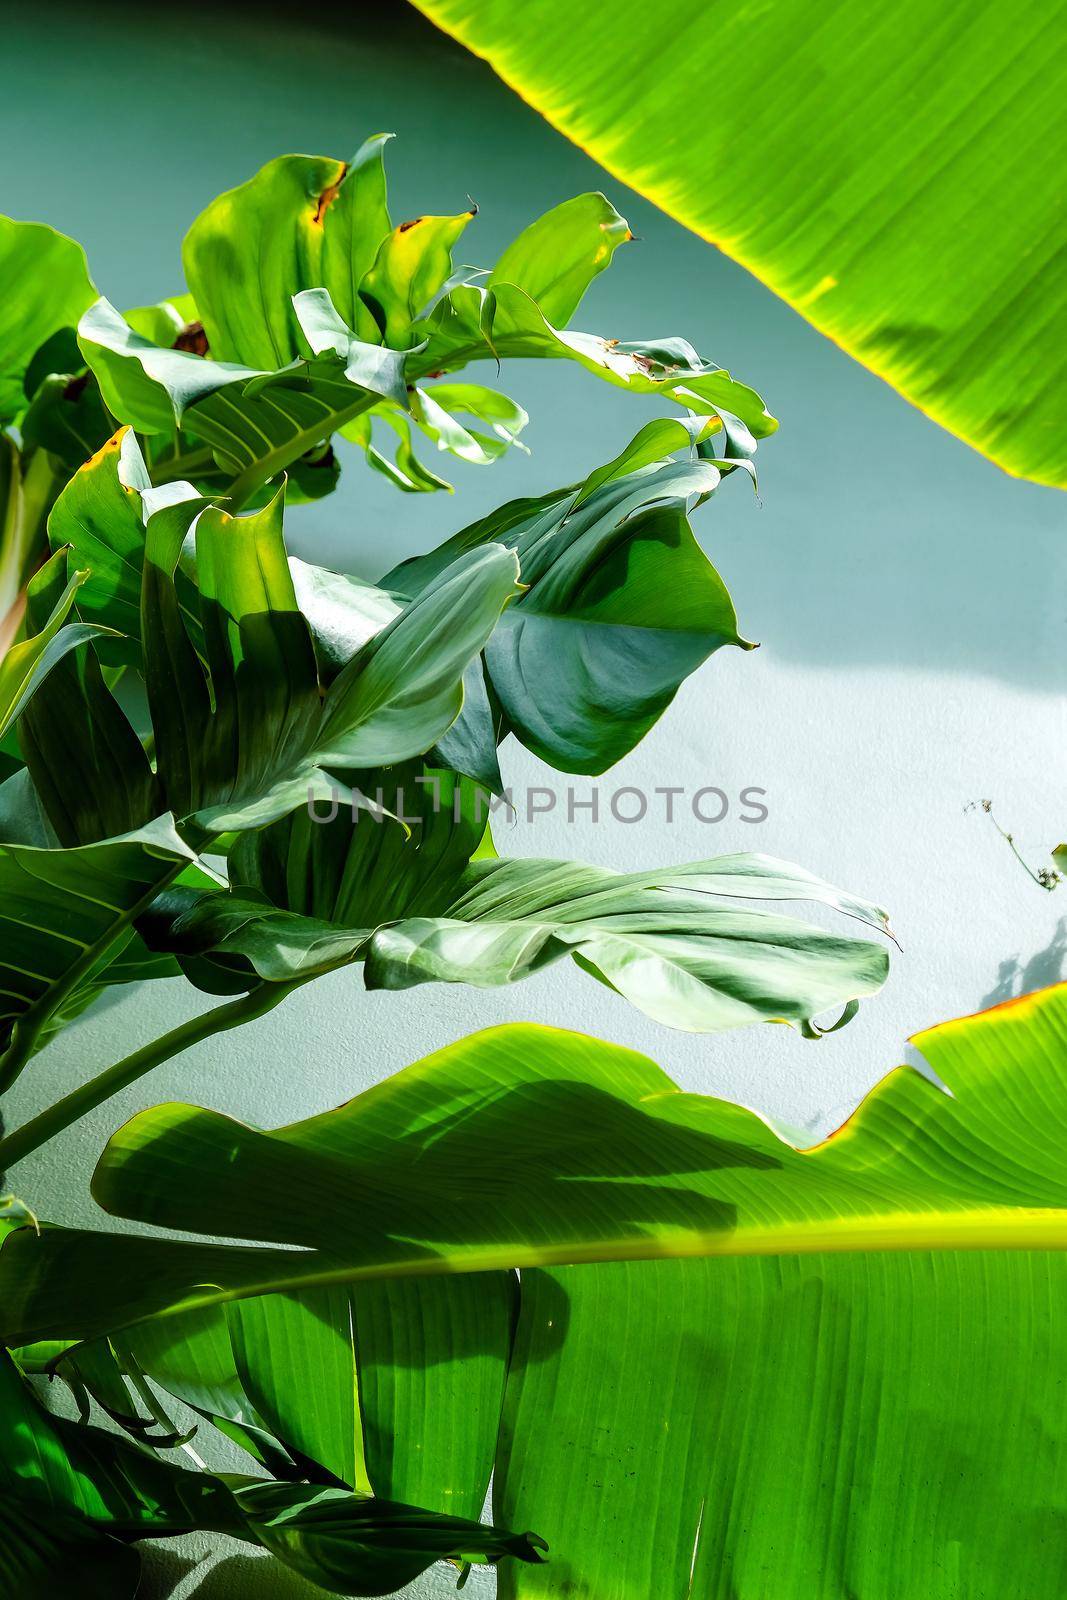 Closeup image of green banana tree leaves outdoors